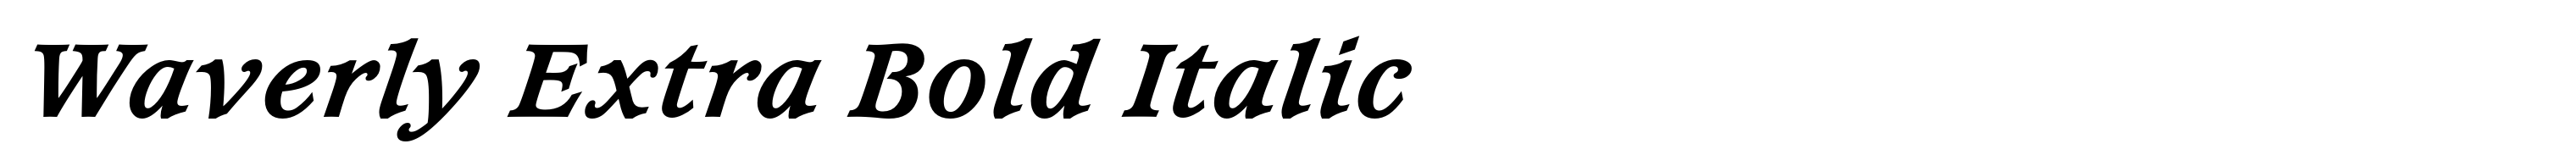 Waverly Extra Bold Italic